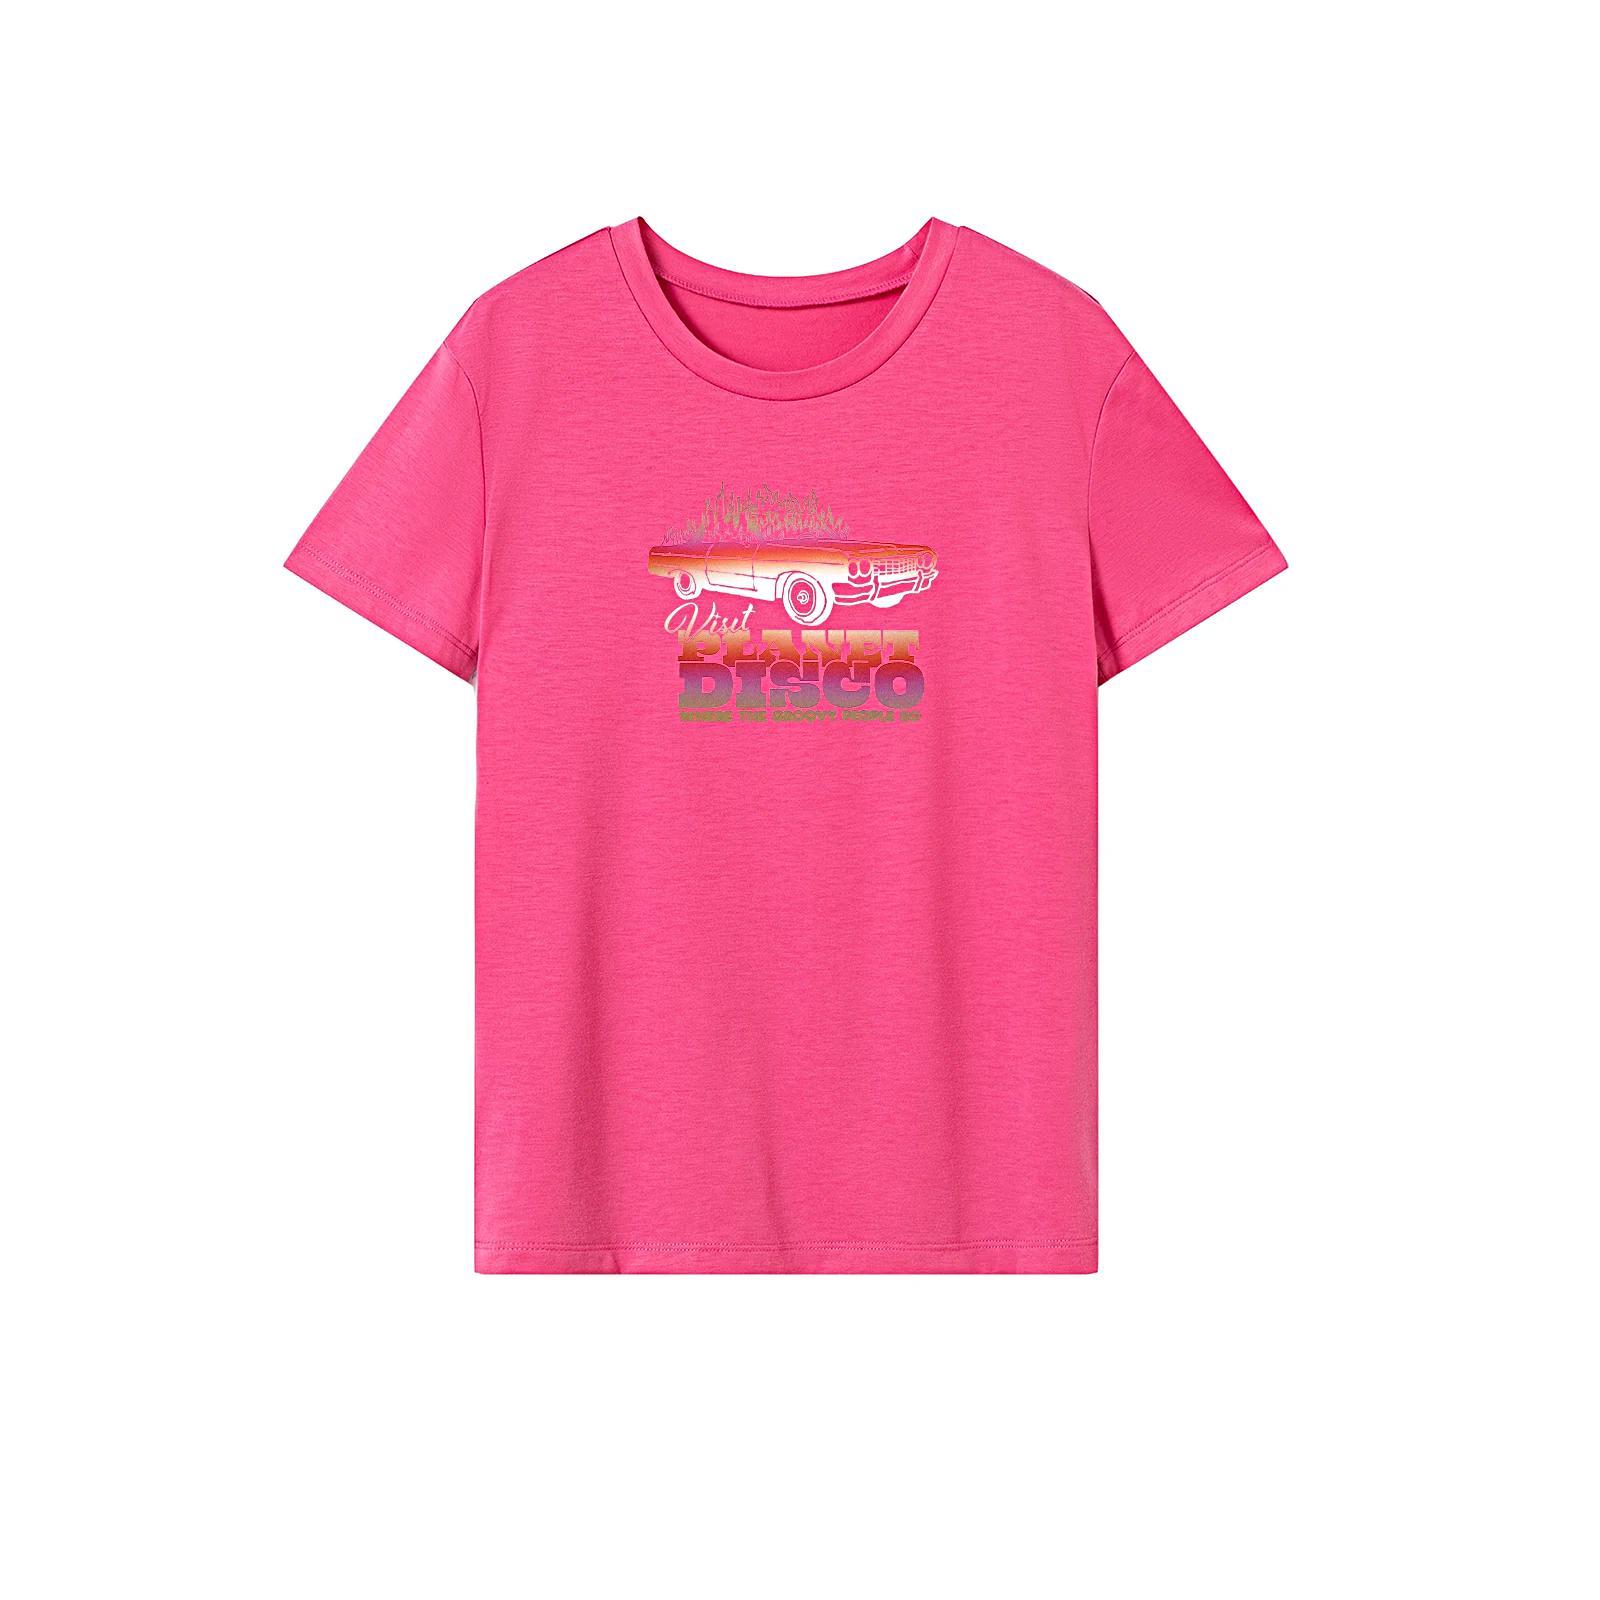 Womens T Shirt Summer Round Neck Basic Tee Shirt for Traveling Hiking Street L